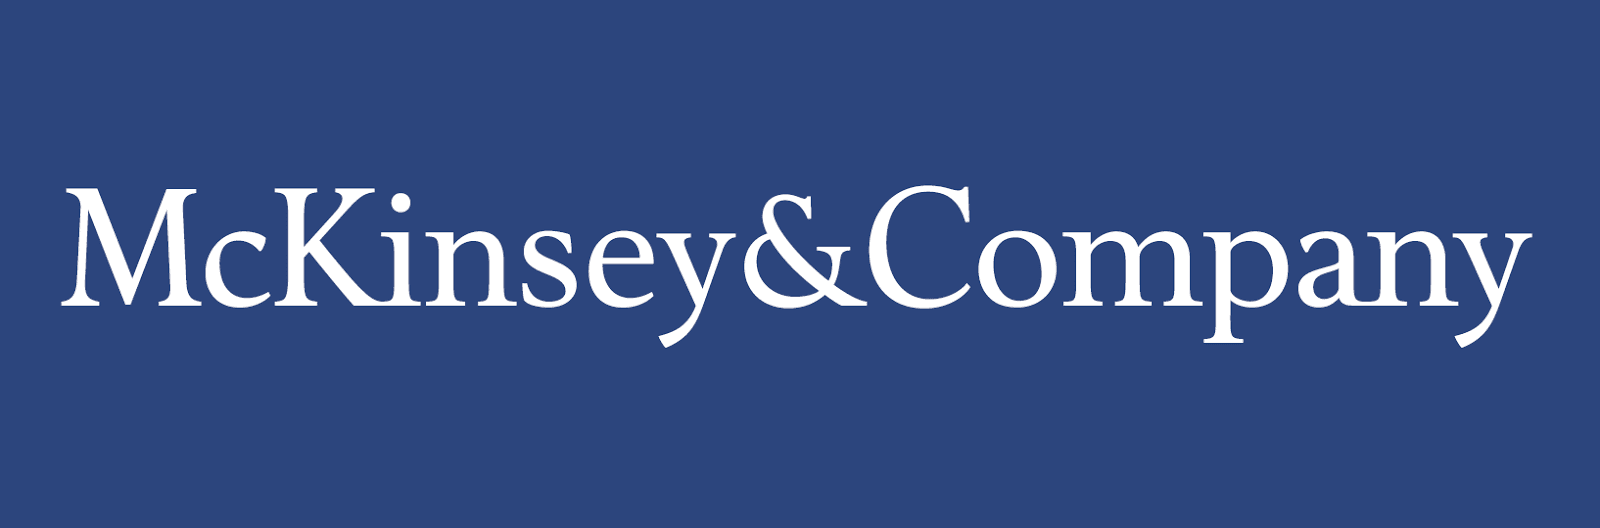 McKinsey_Quarterly_logo.png